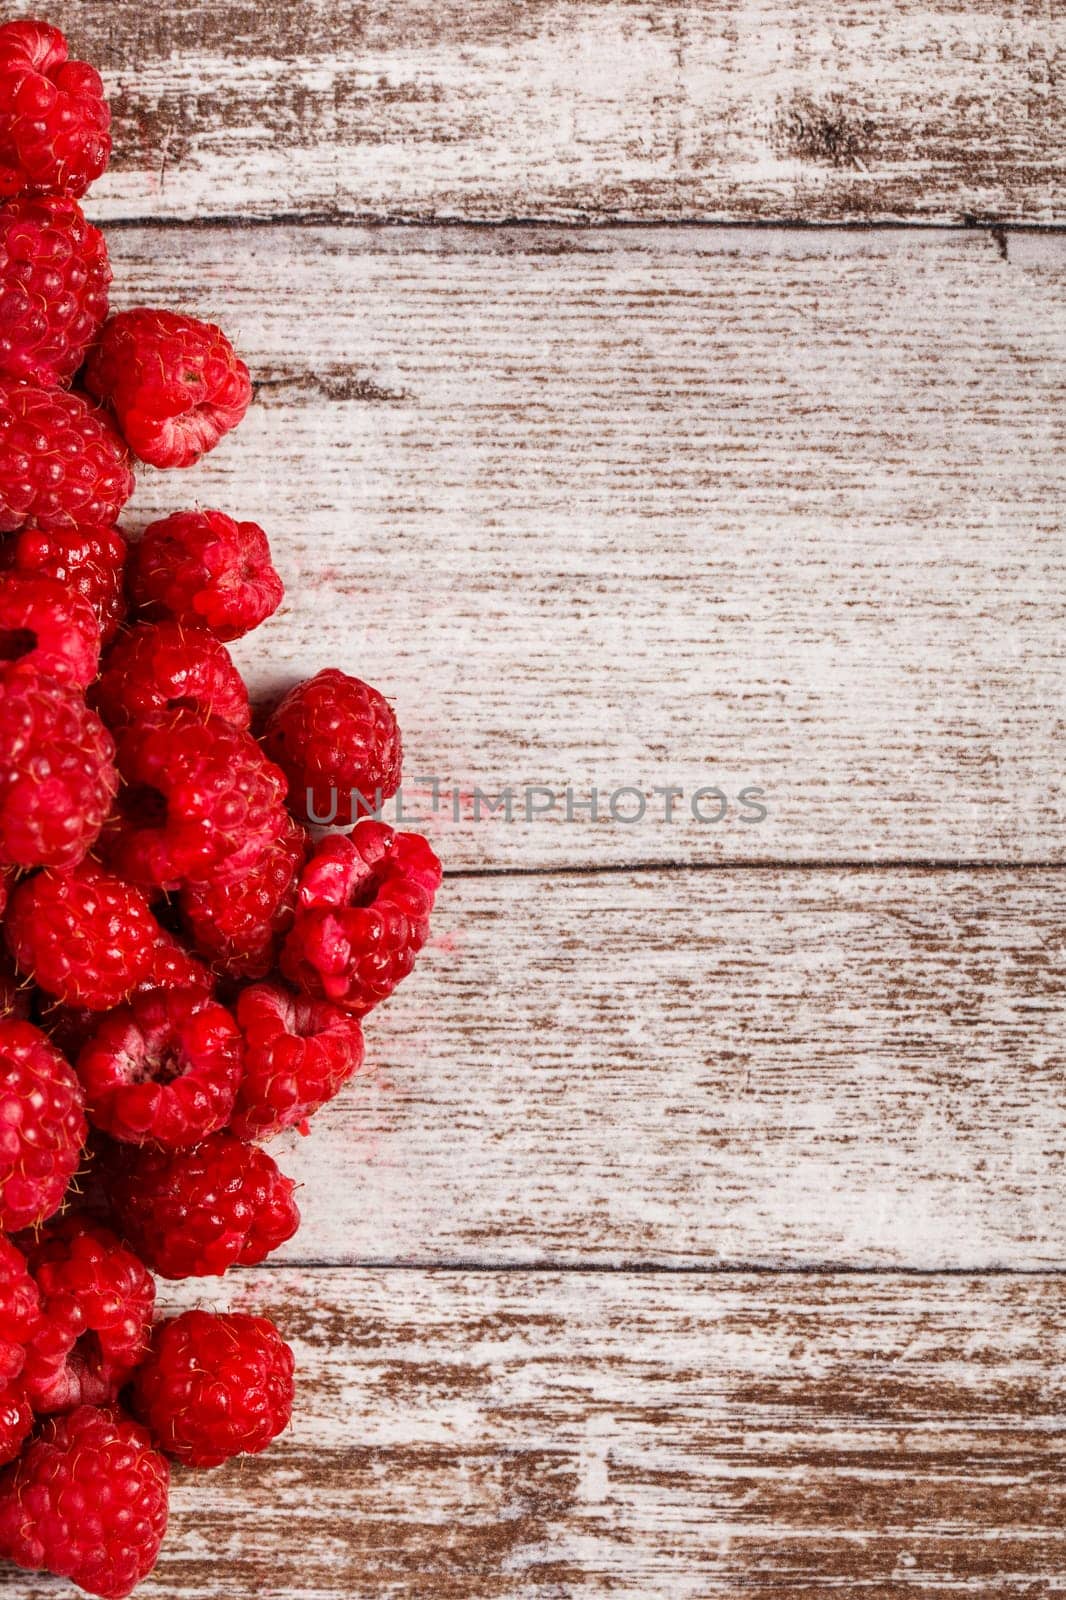 Fresh juicy raspberry on wooden background by DCStudio